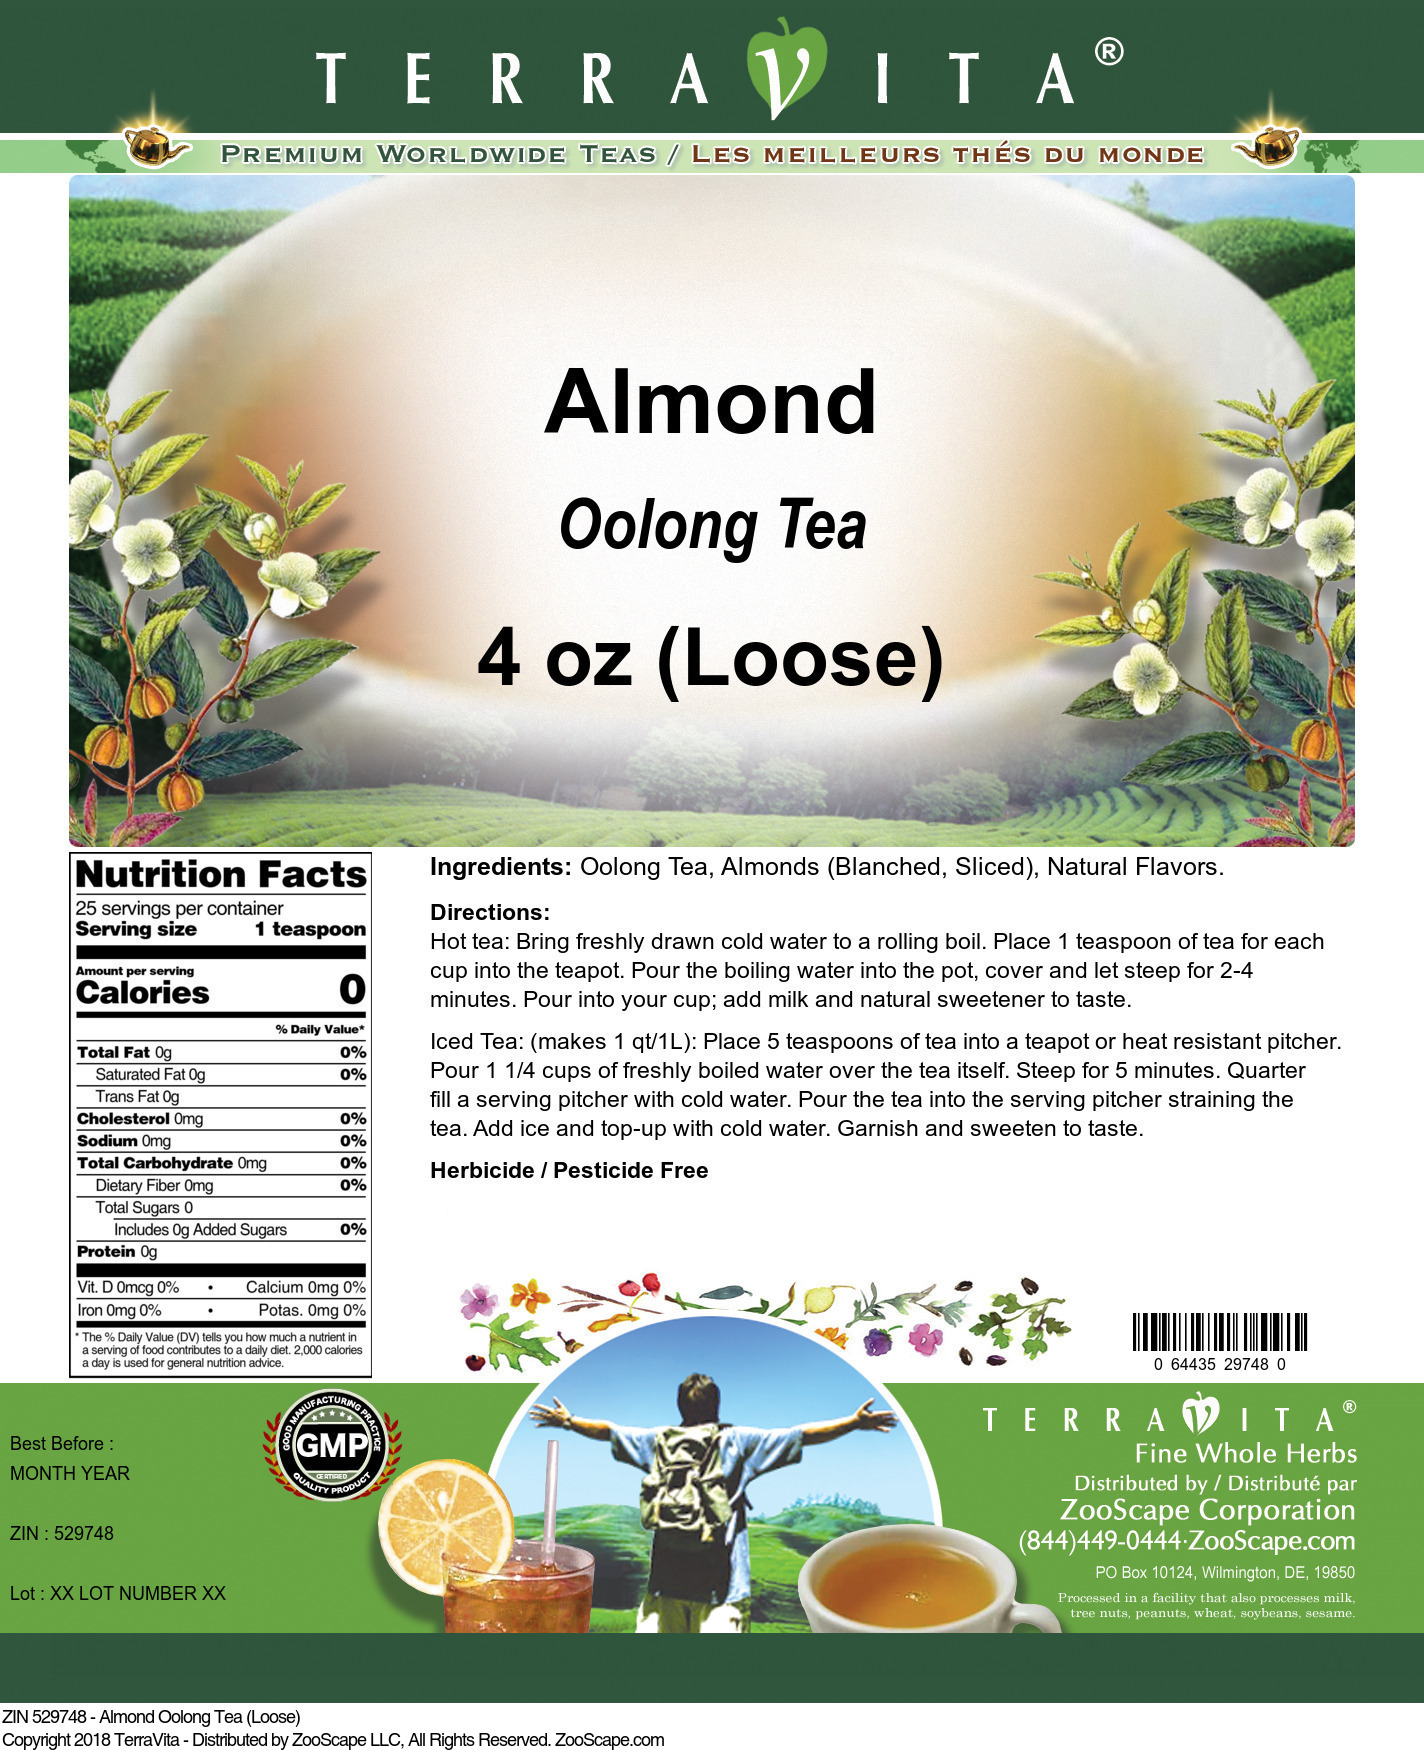 Almond Oolong Tea (Loose) - Label